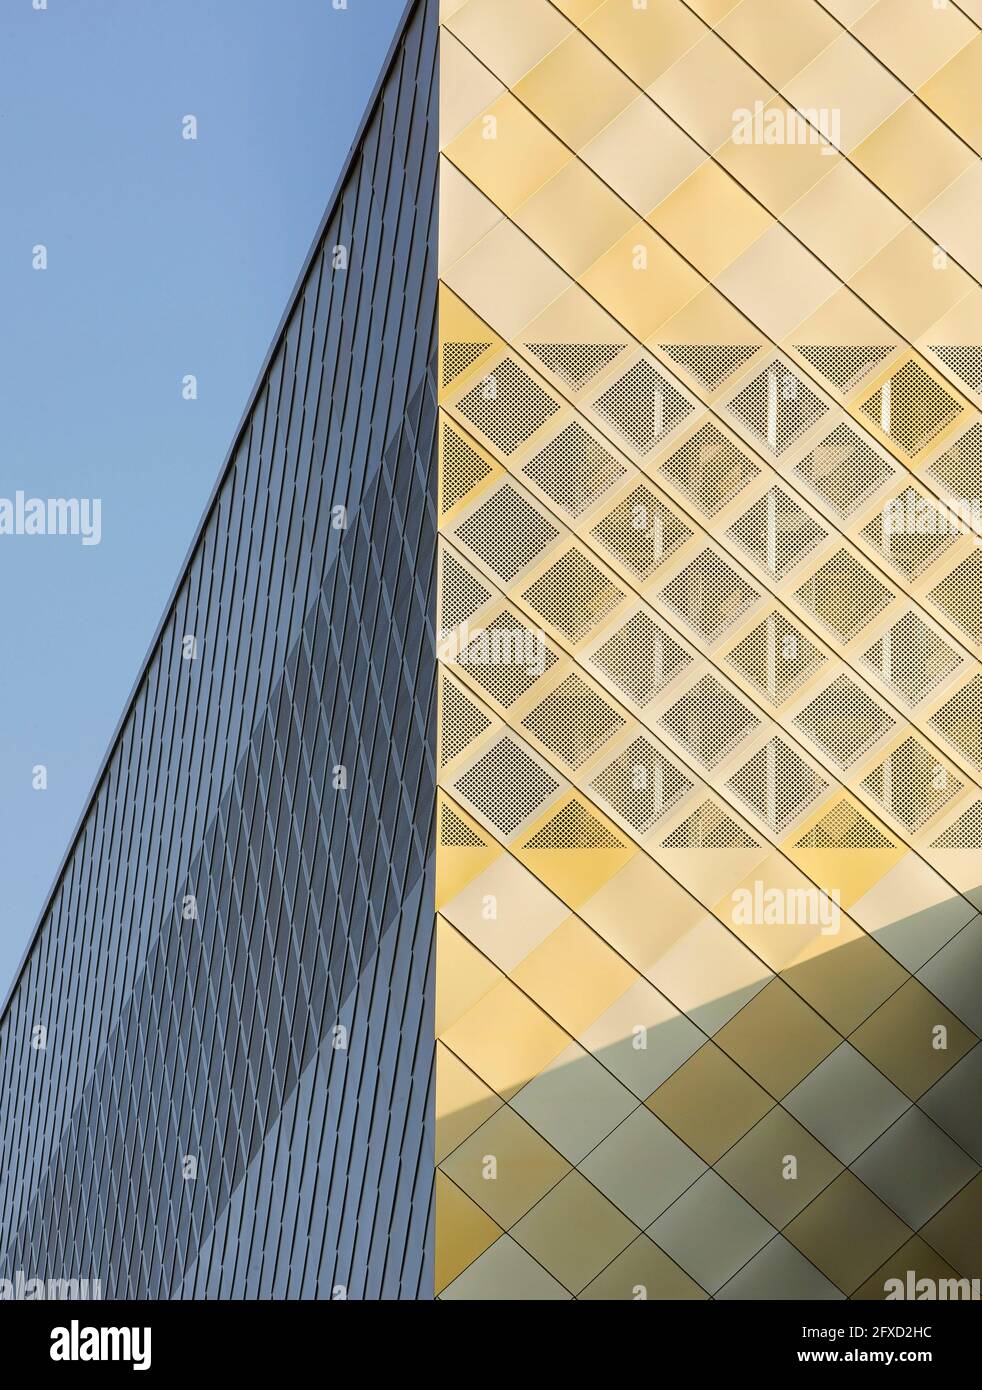 Detail of facade cladding. University of Birmingham, Collaborative Teaching Laboratory, Birmingham, United Kingdom. Architect: Sheppard Robson, 2018. Stock Photo